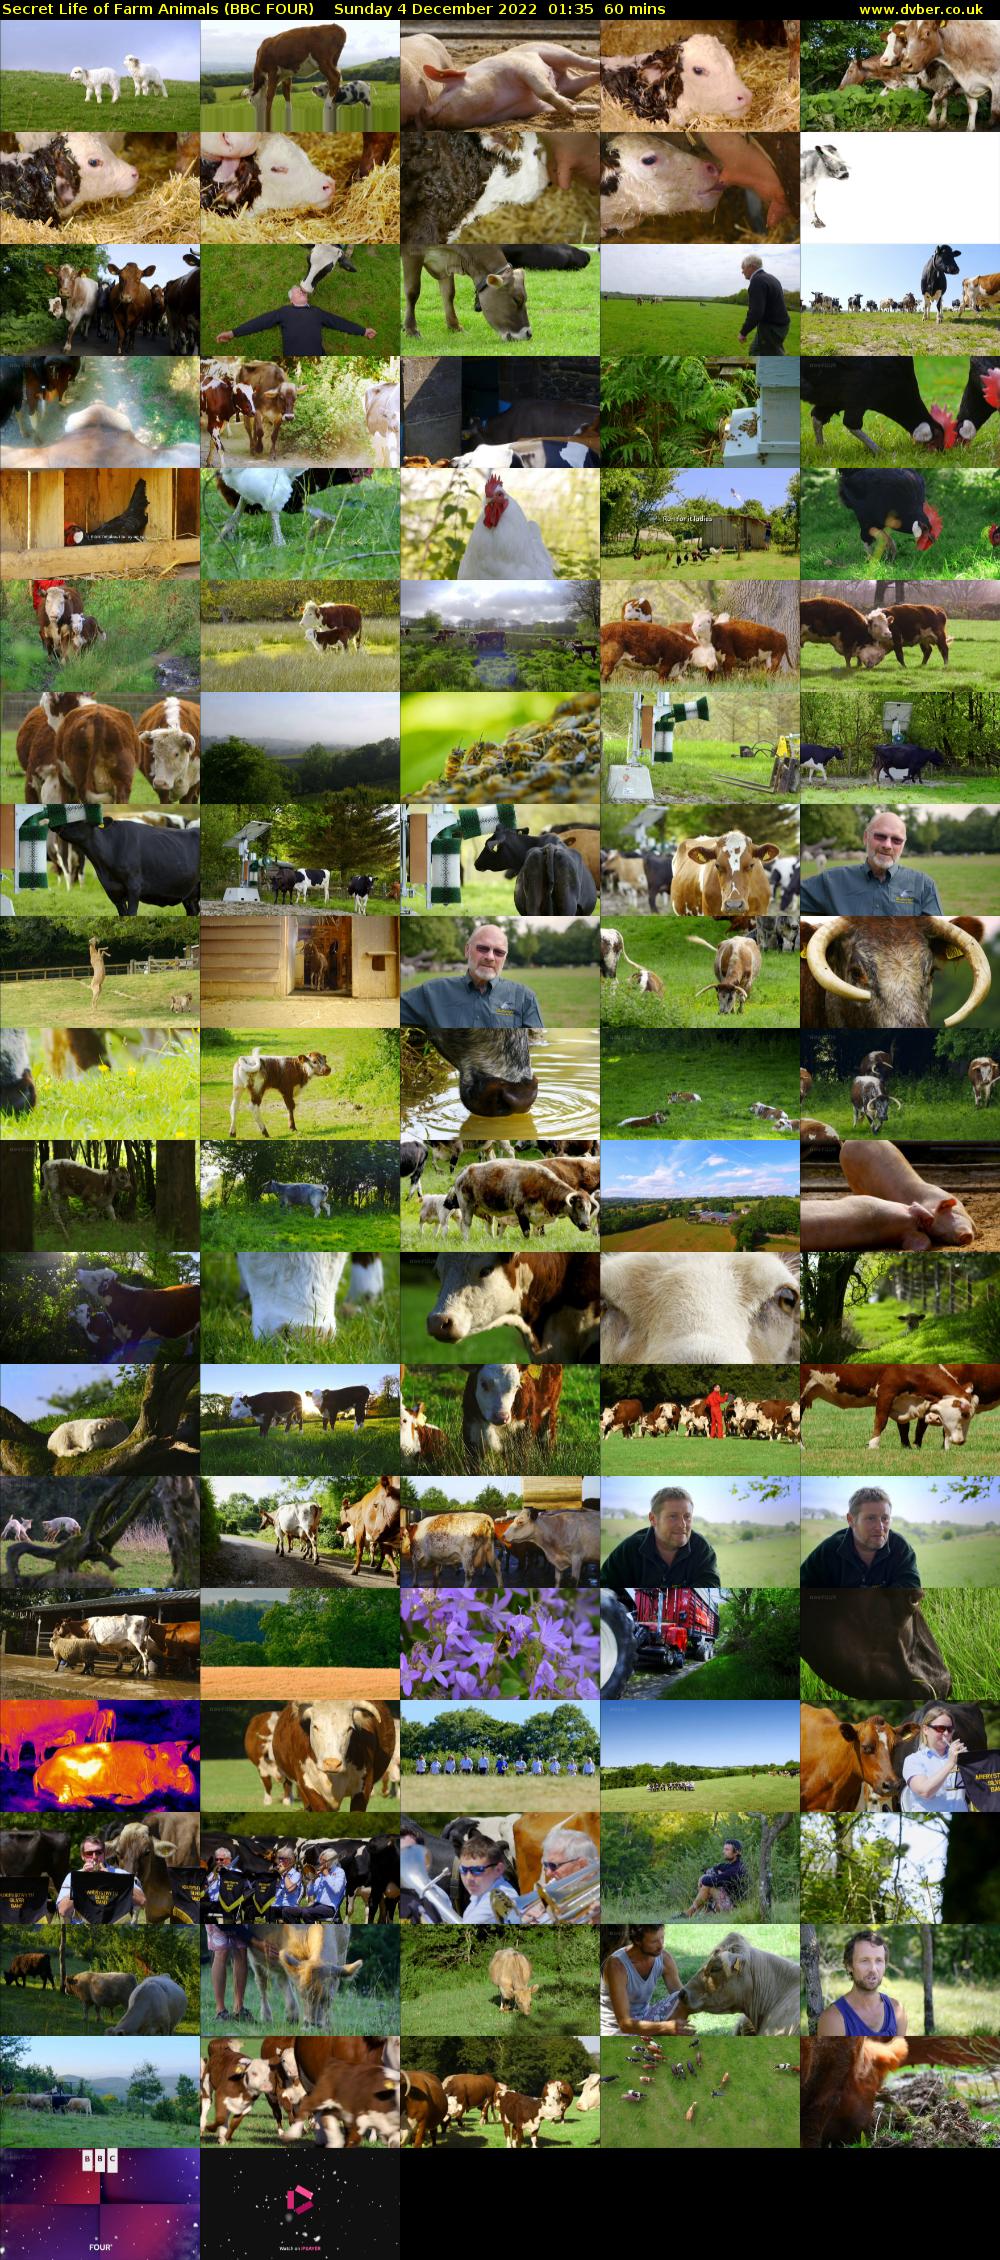 Secret Life of Farm Animals (BBC FOUR) Sunday 4 December 2022 01:35 - 02:35